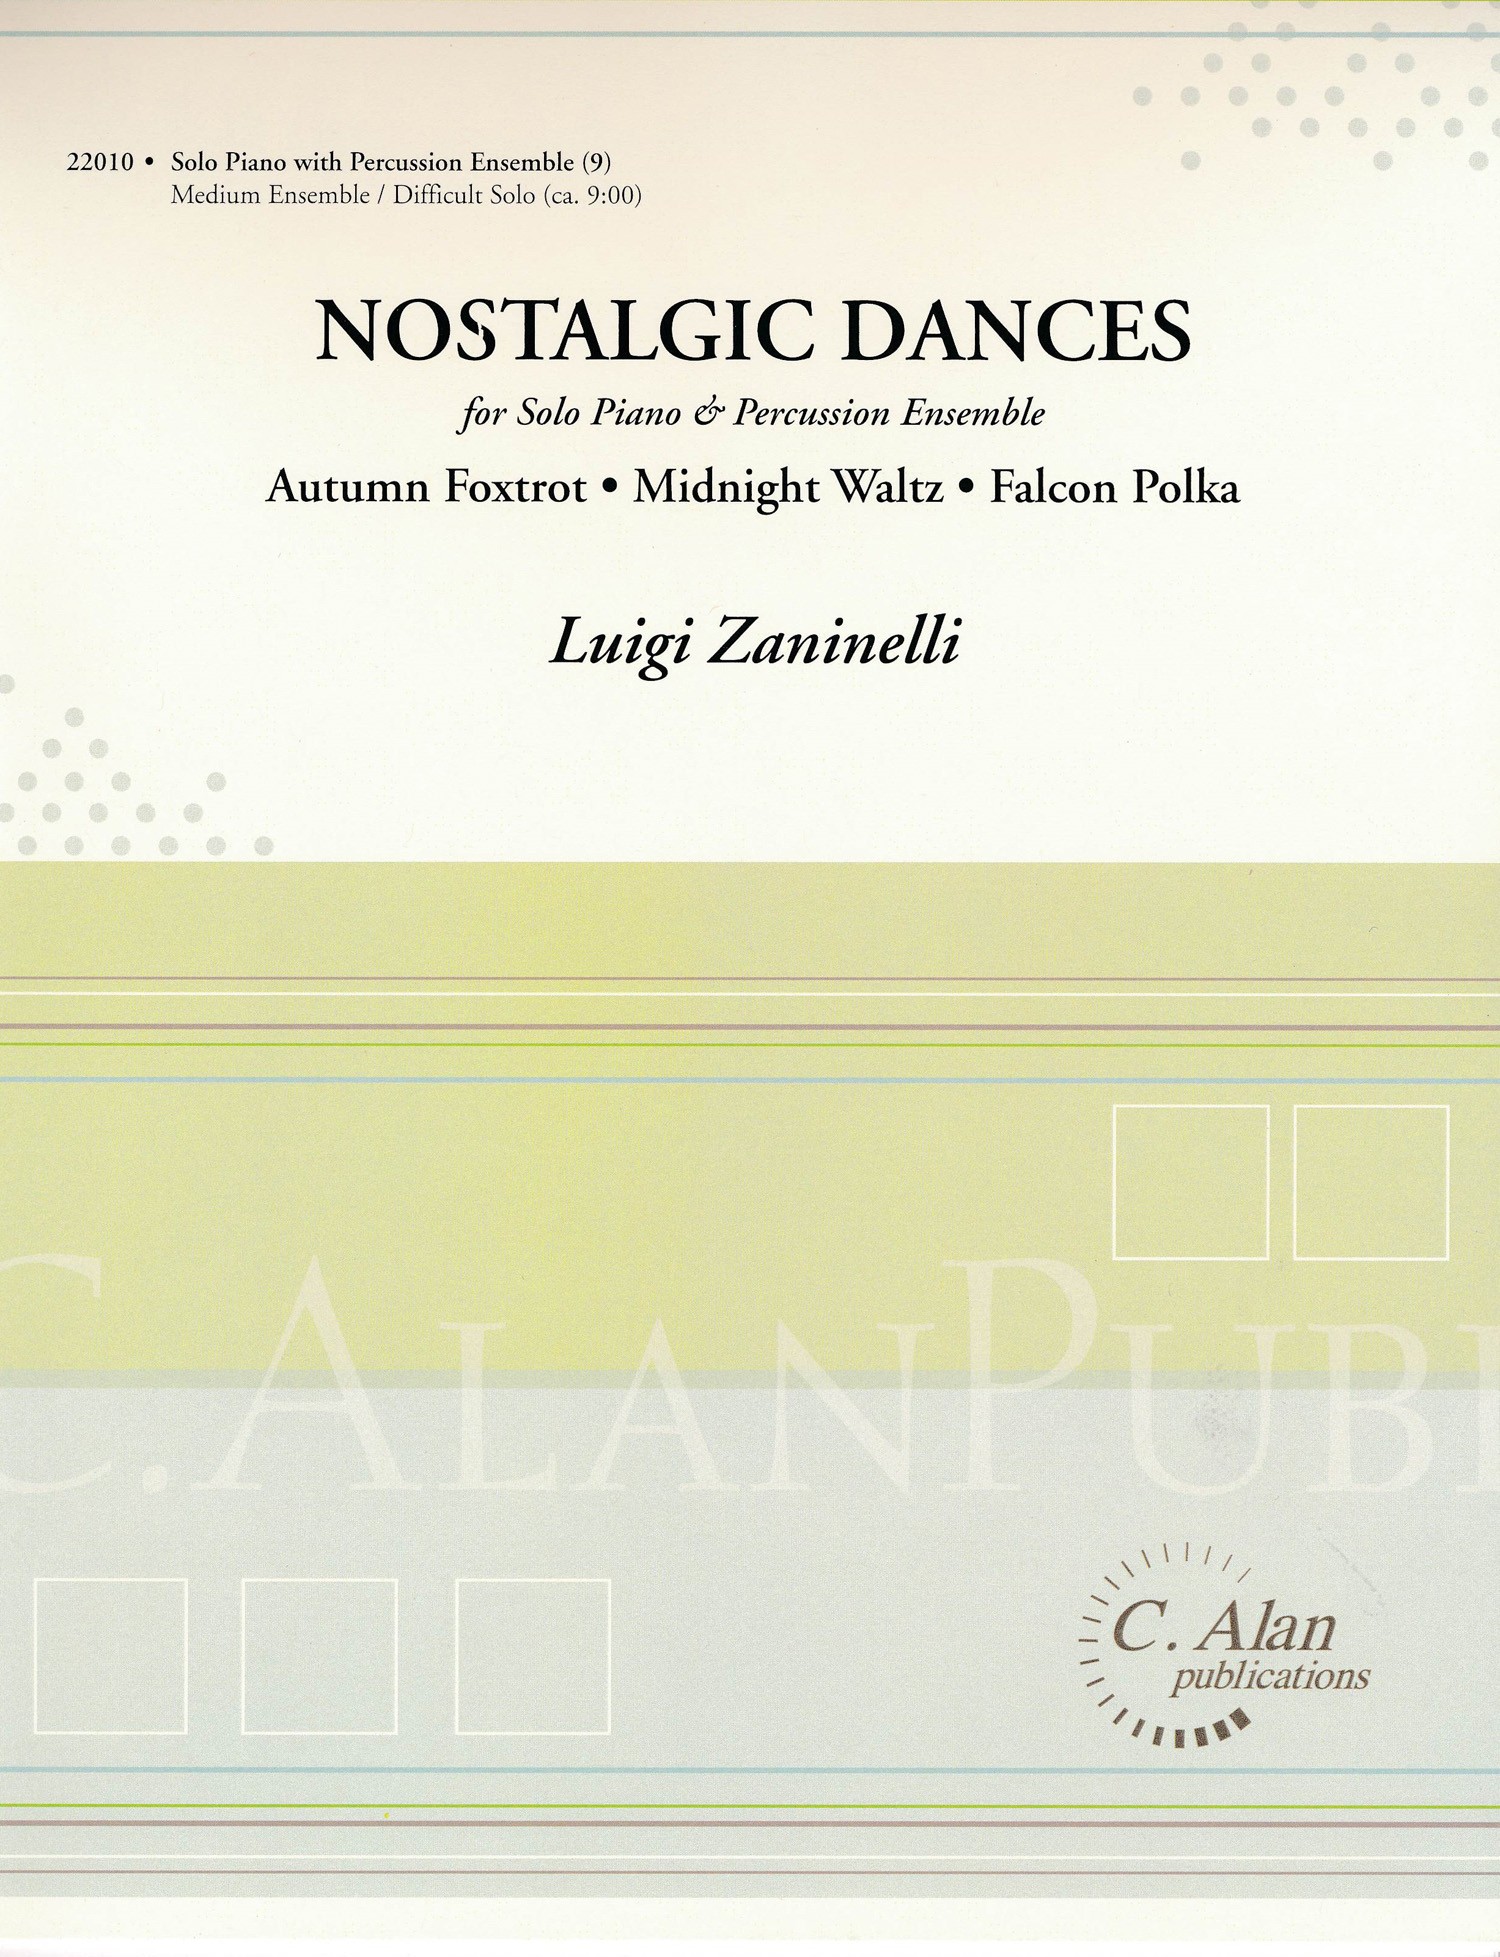 Nostalgic Dances by Luigi Zaninelli